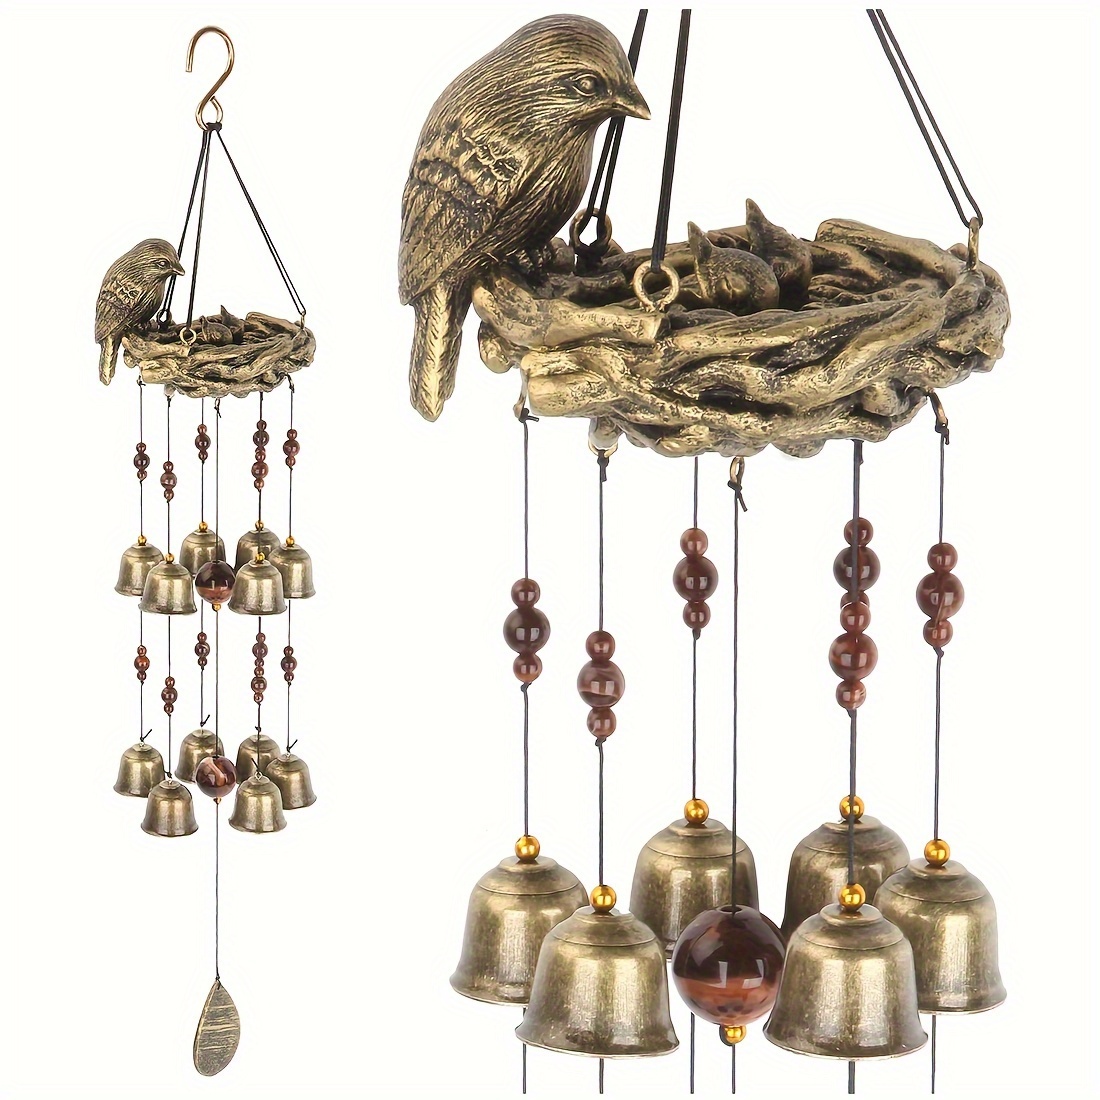 

1pc Bird Nest Wind Chime, Bird Bells Chimes With 12 Wind Bells For Glory Mother's Love Gift, Garden Backyard Church Hanging Decor, Bronze